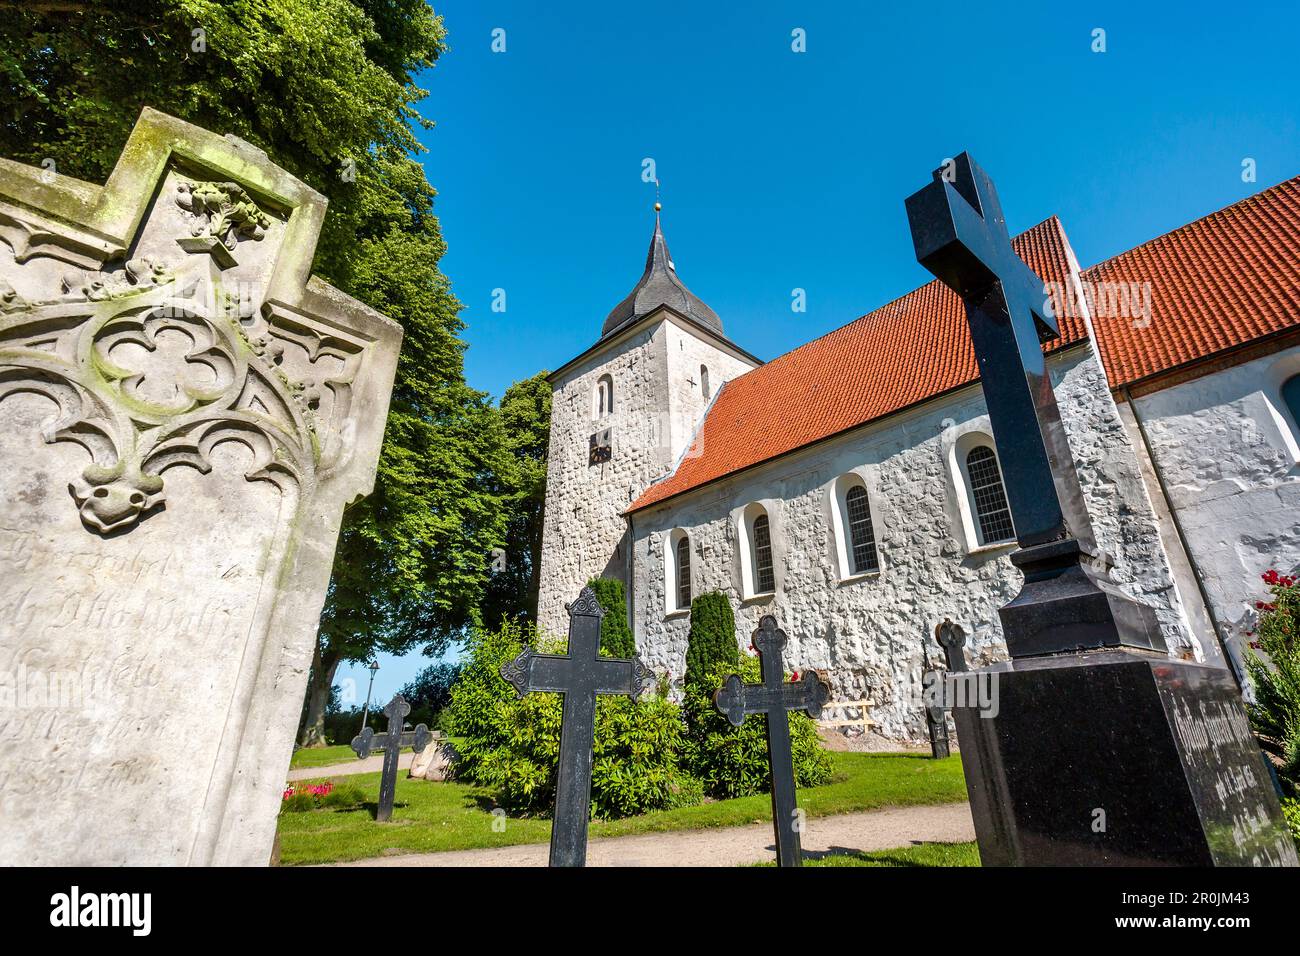 St. Peter's church, Bosau, Lake Ploen, Schleswig-Holstein, Germany Stock Photo